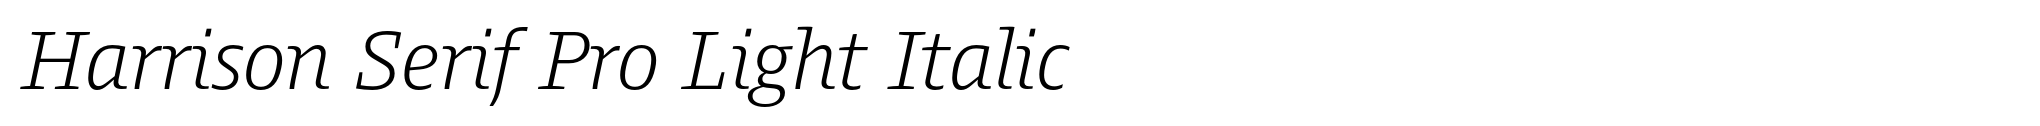 Harrison Serif Pro Light Italic image